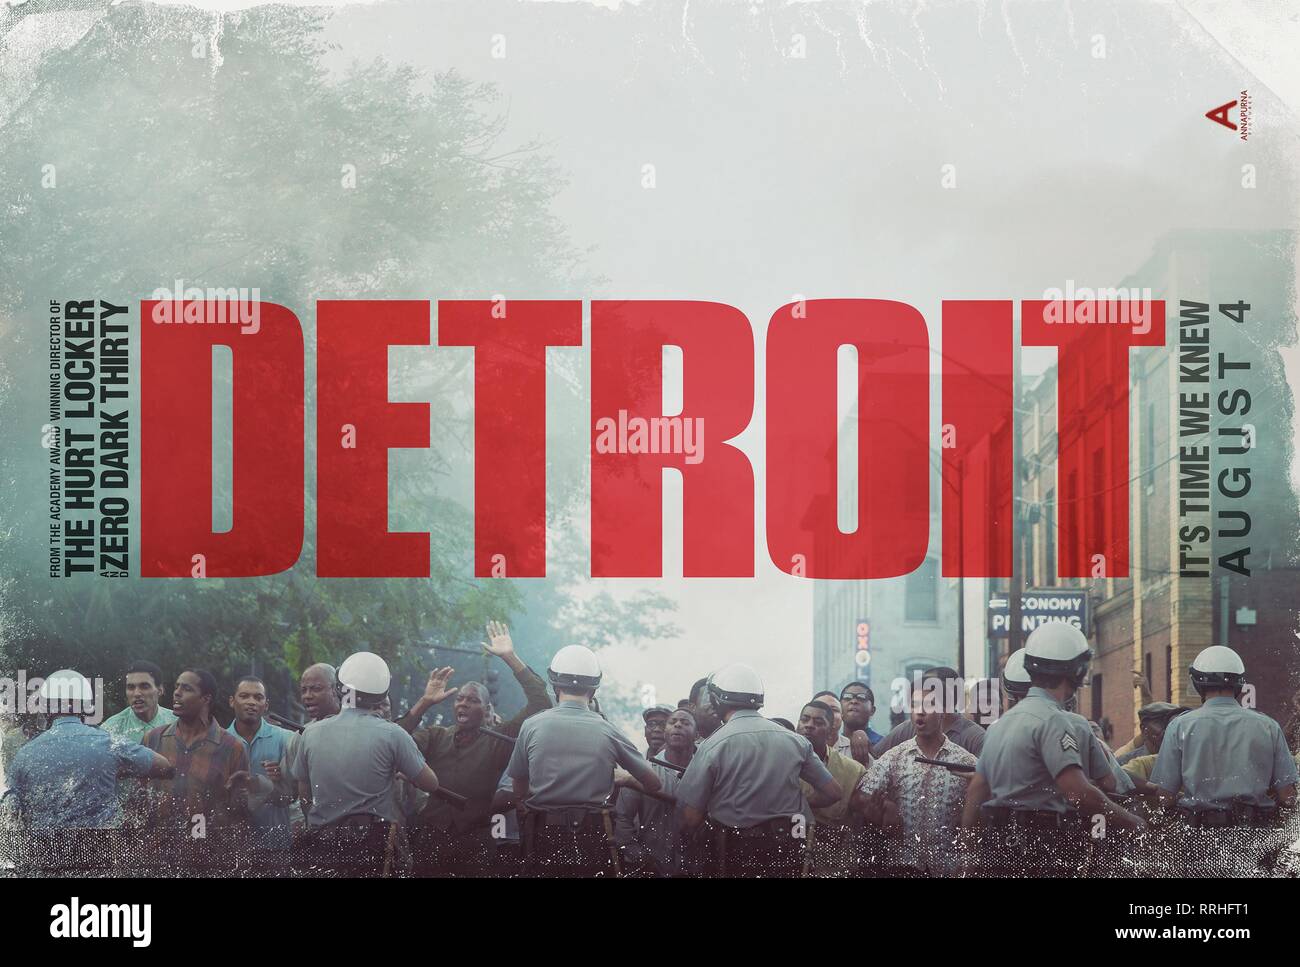 Detroit Movie Poster 2017 Stockfotografie Alamy